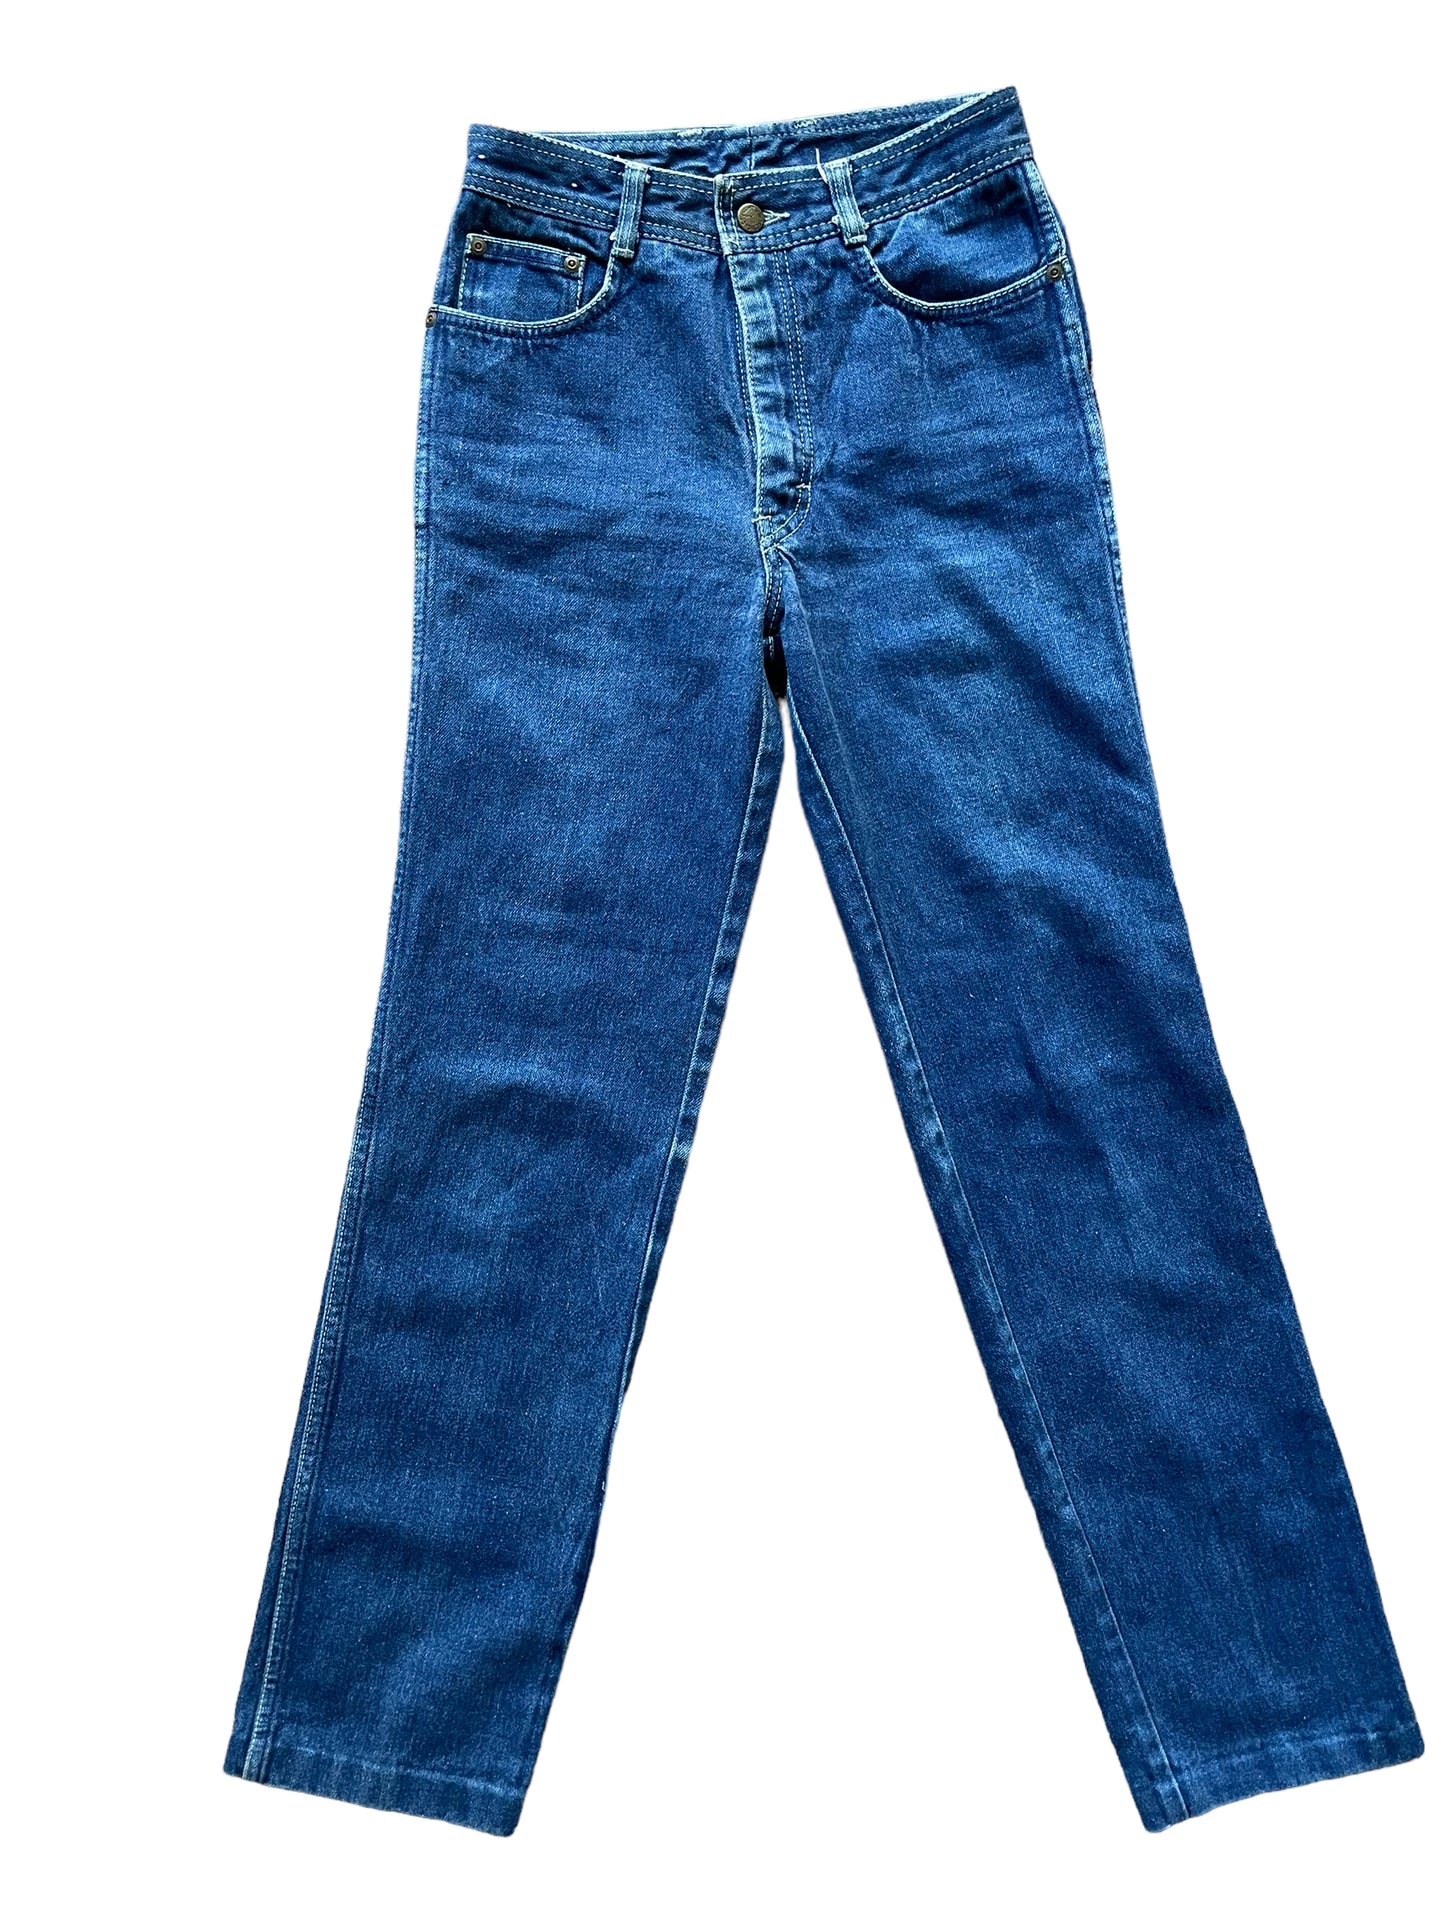 Full Fornt view of Vintage 1980s Jordache Jeans Sz SM 